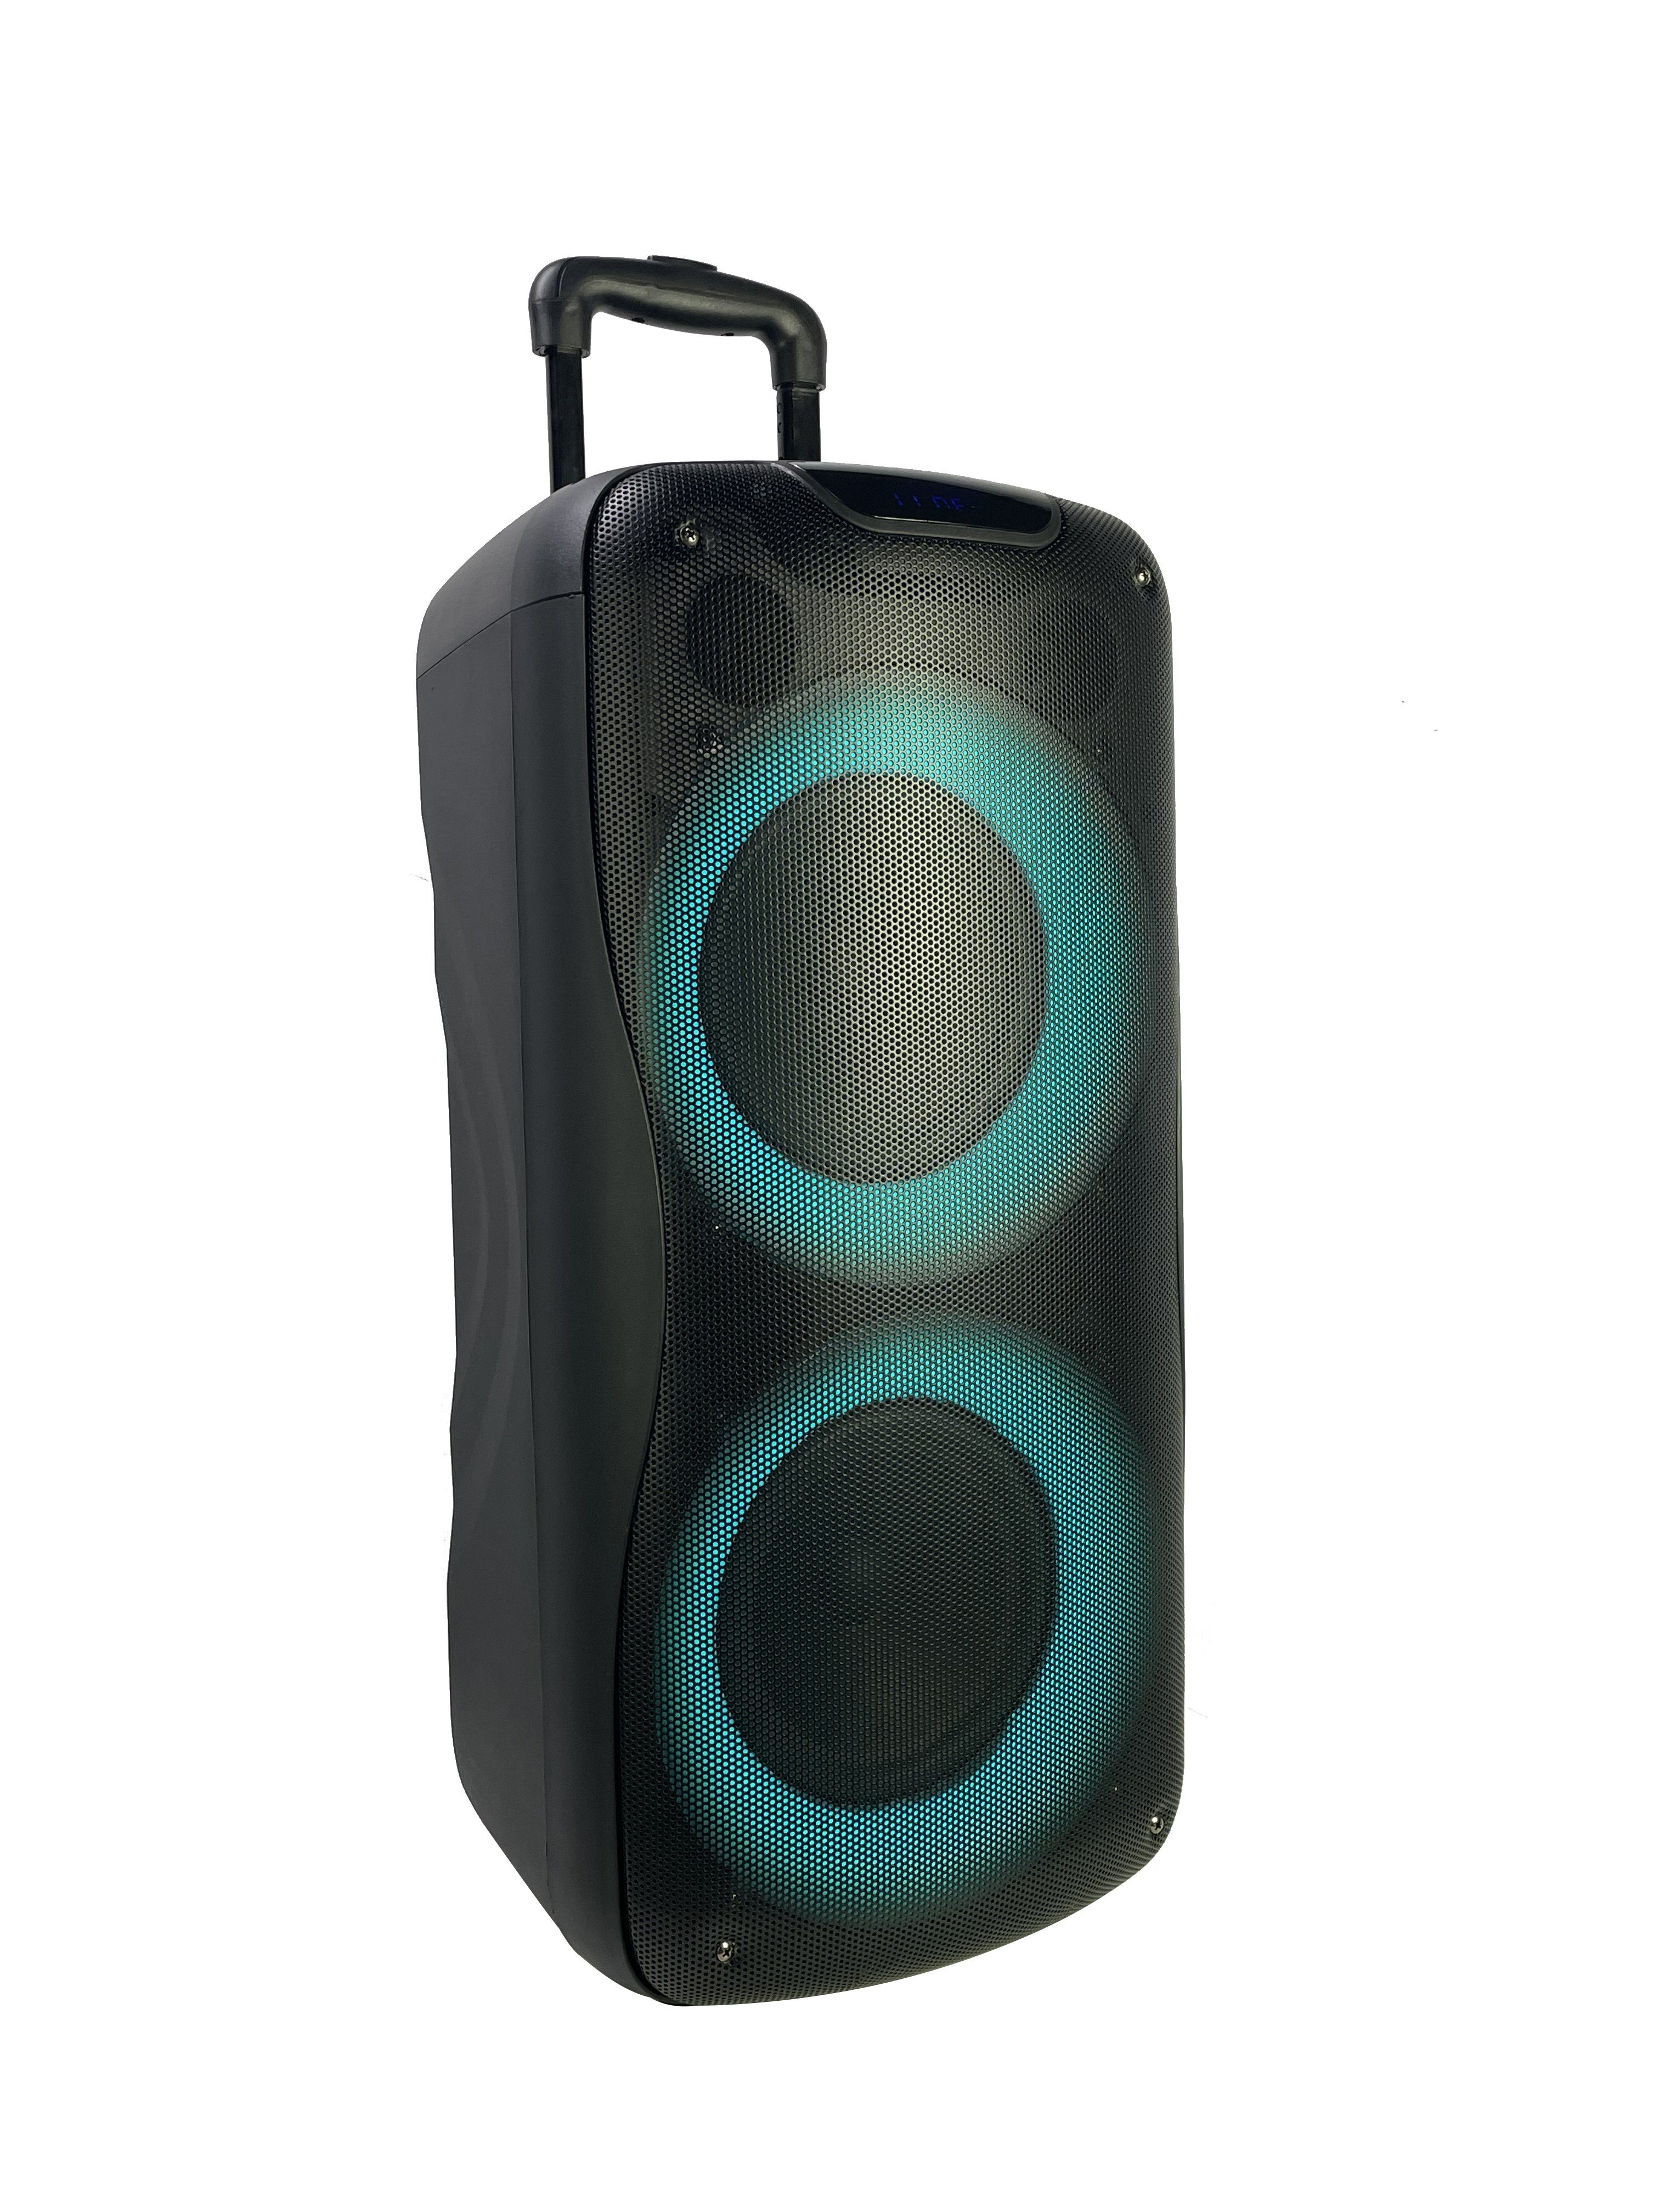 JTC LED (100 Bass) Klang, hochauflösender 2 Mega W, Lichtkreise, LSPY829 Bluetooth, Party-Lautsprecher